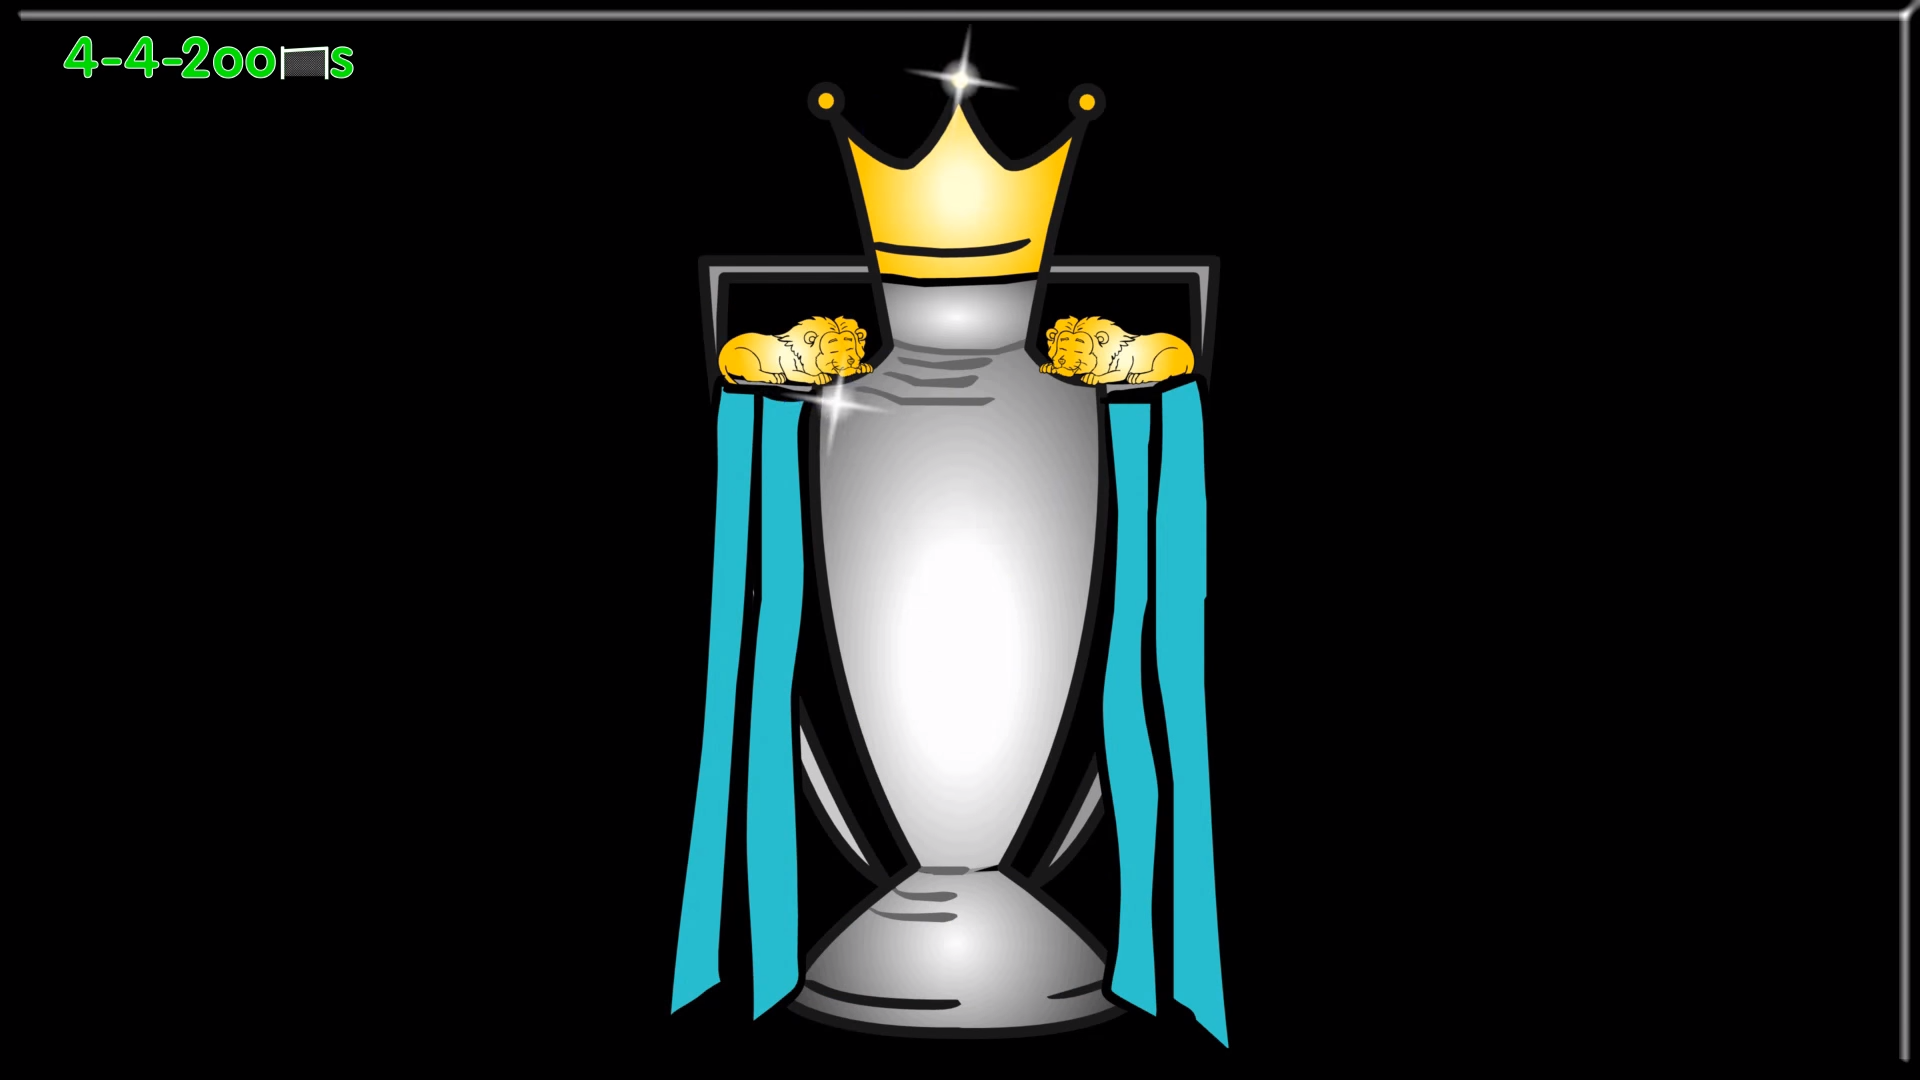 Premier League 2010-11, English Football Wiki